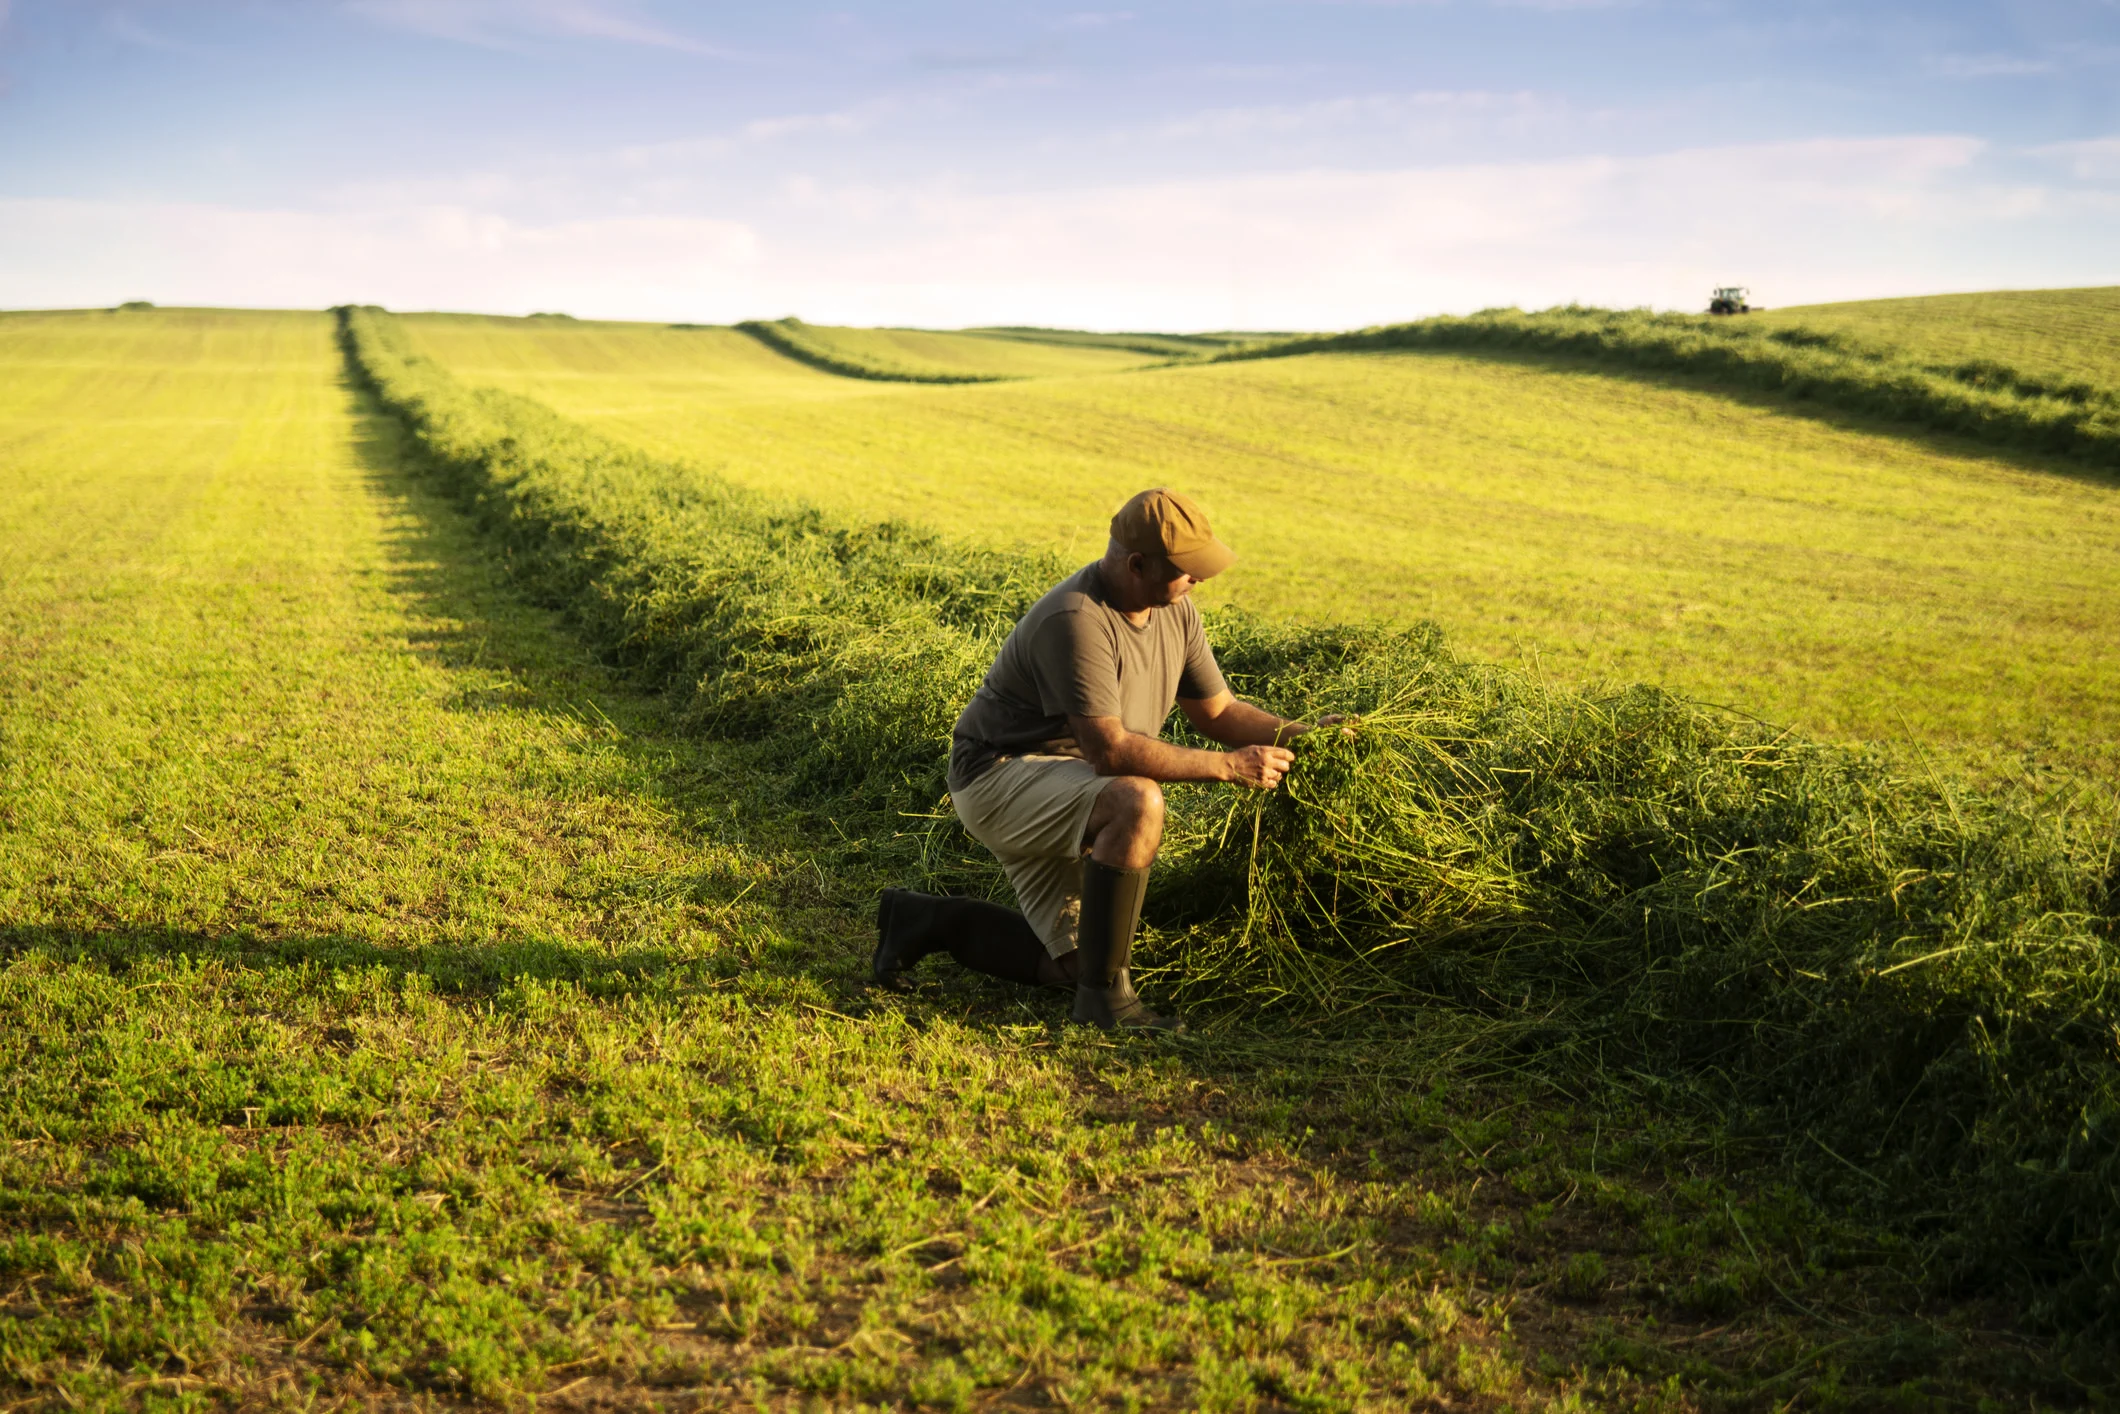 alfalfa cover crop (Fertnig. E+. Getty Images)